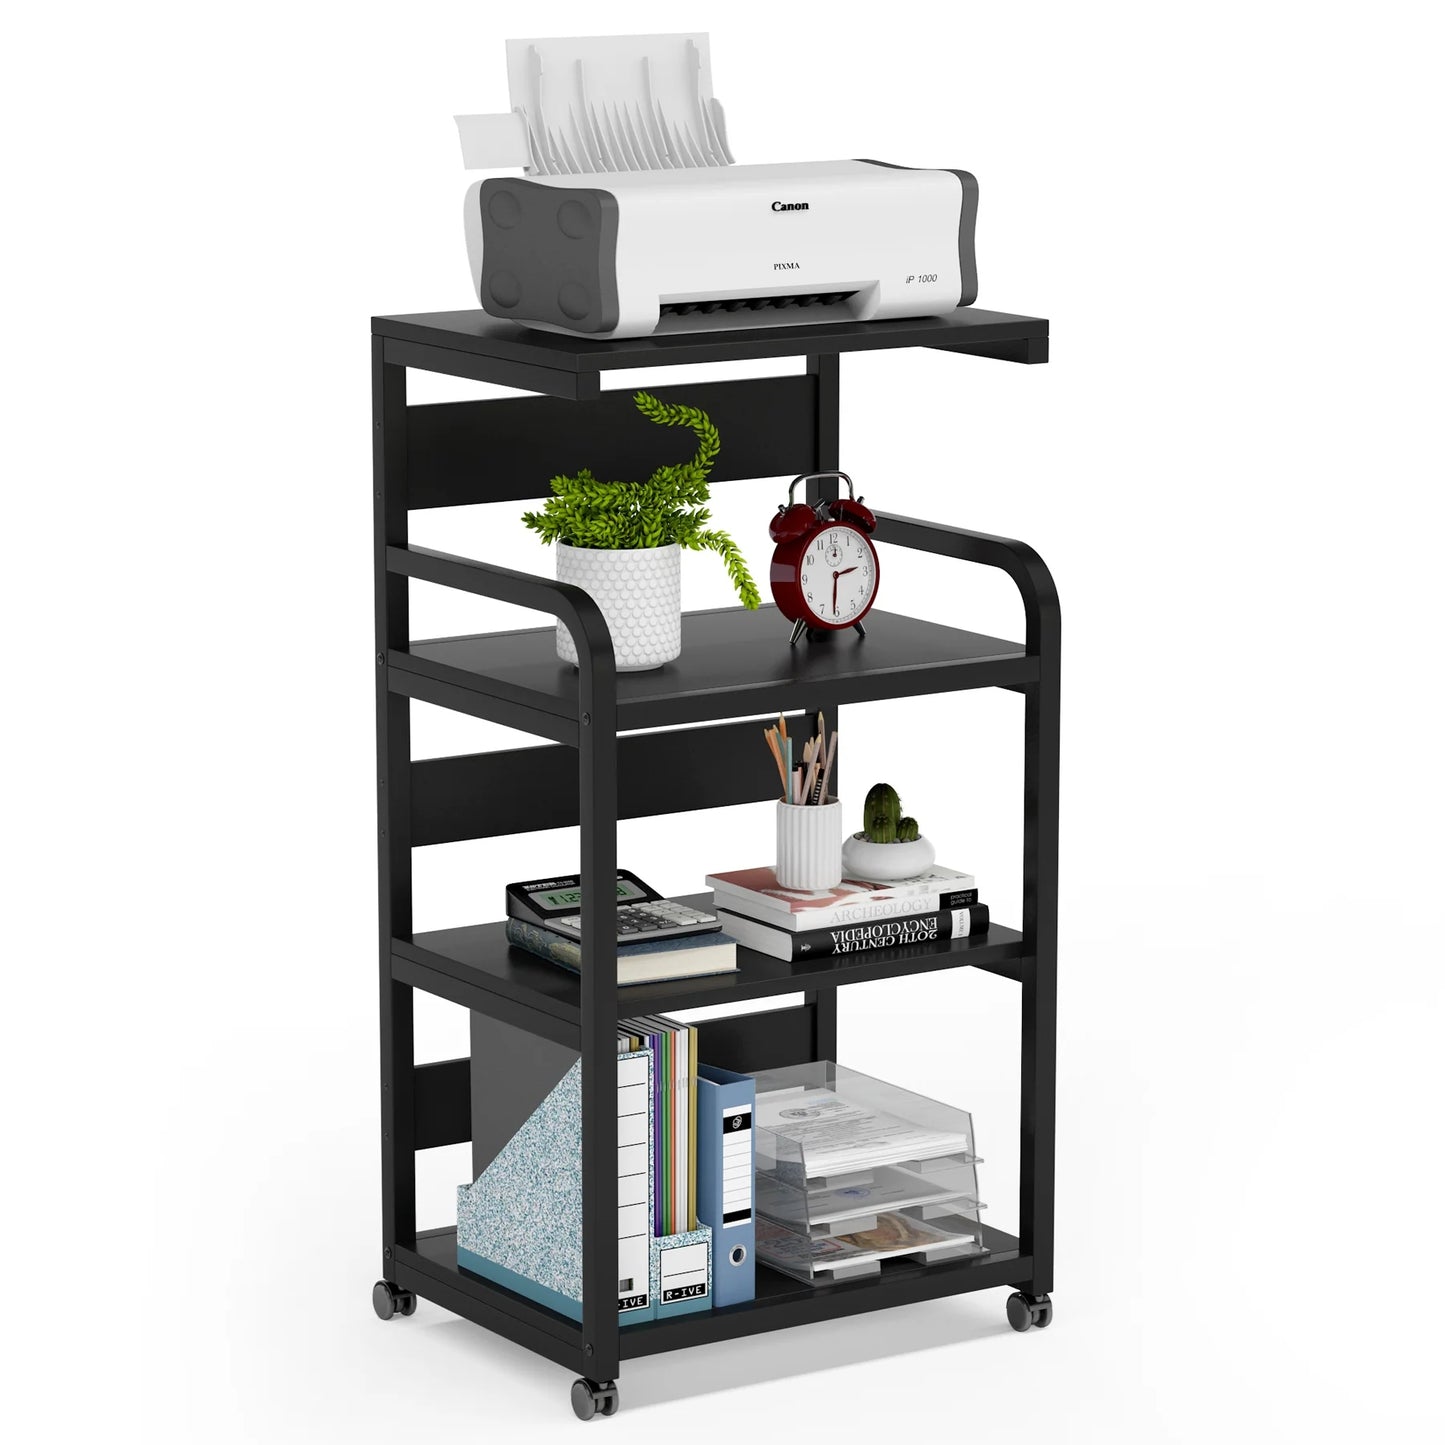 Tribesigns Printer Stand, 4-Shelf Mobile Printer Cart with Storage Shelves